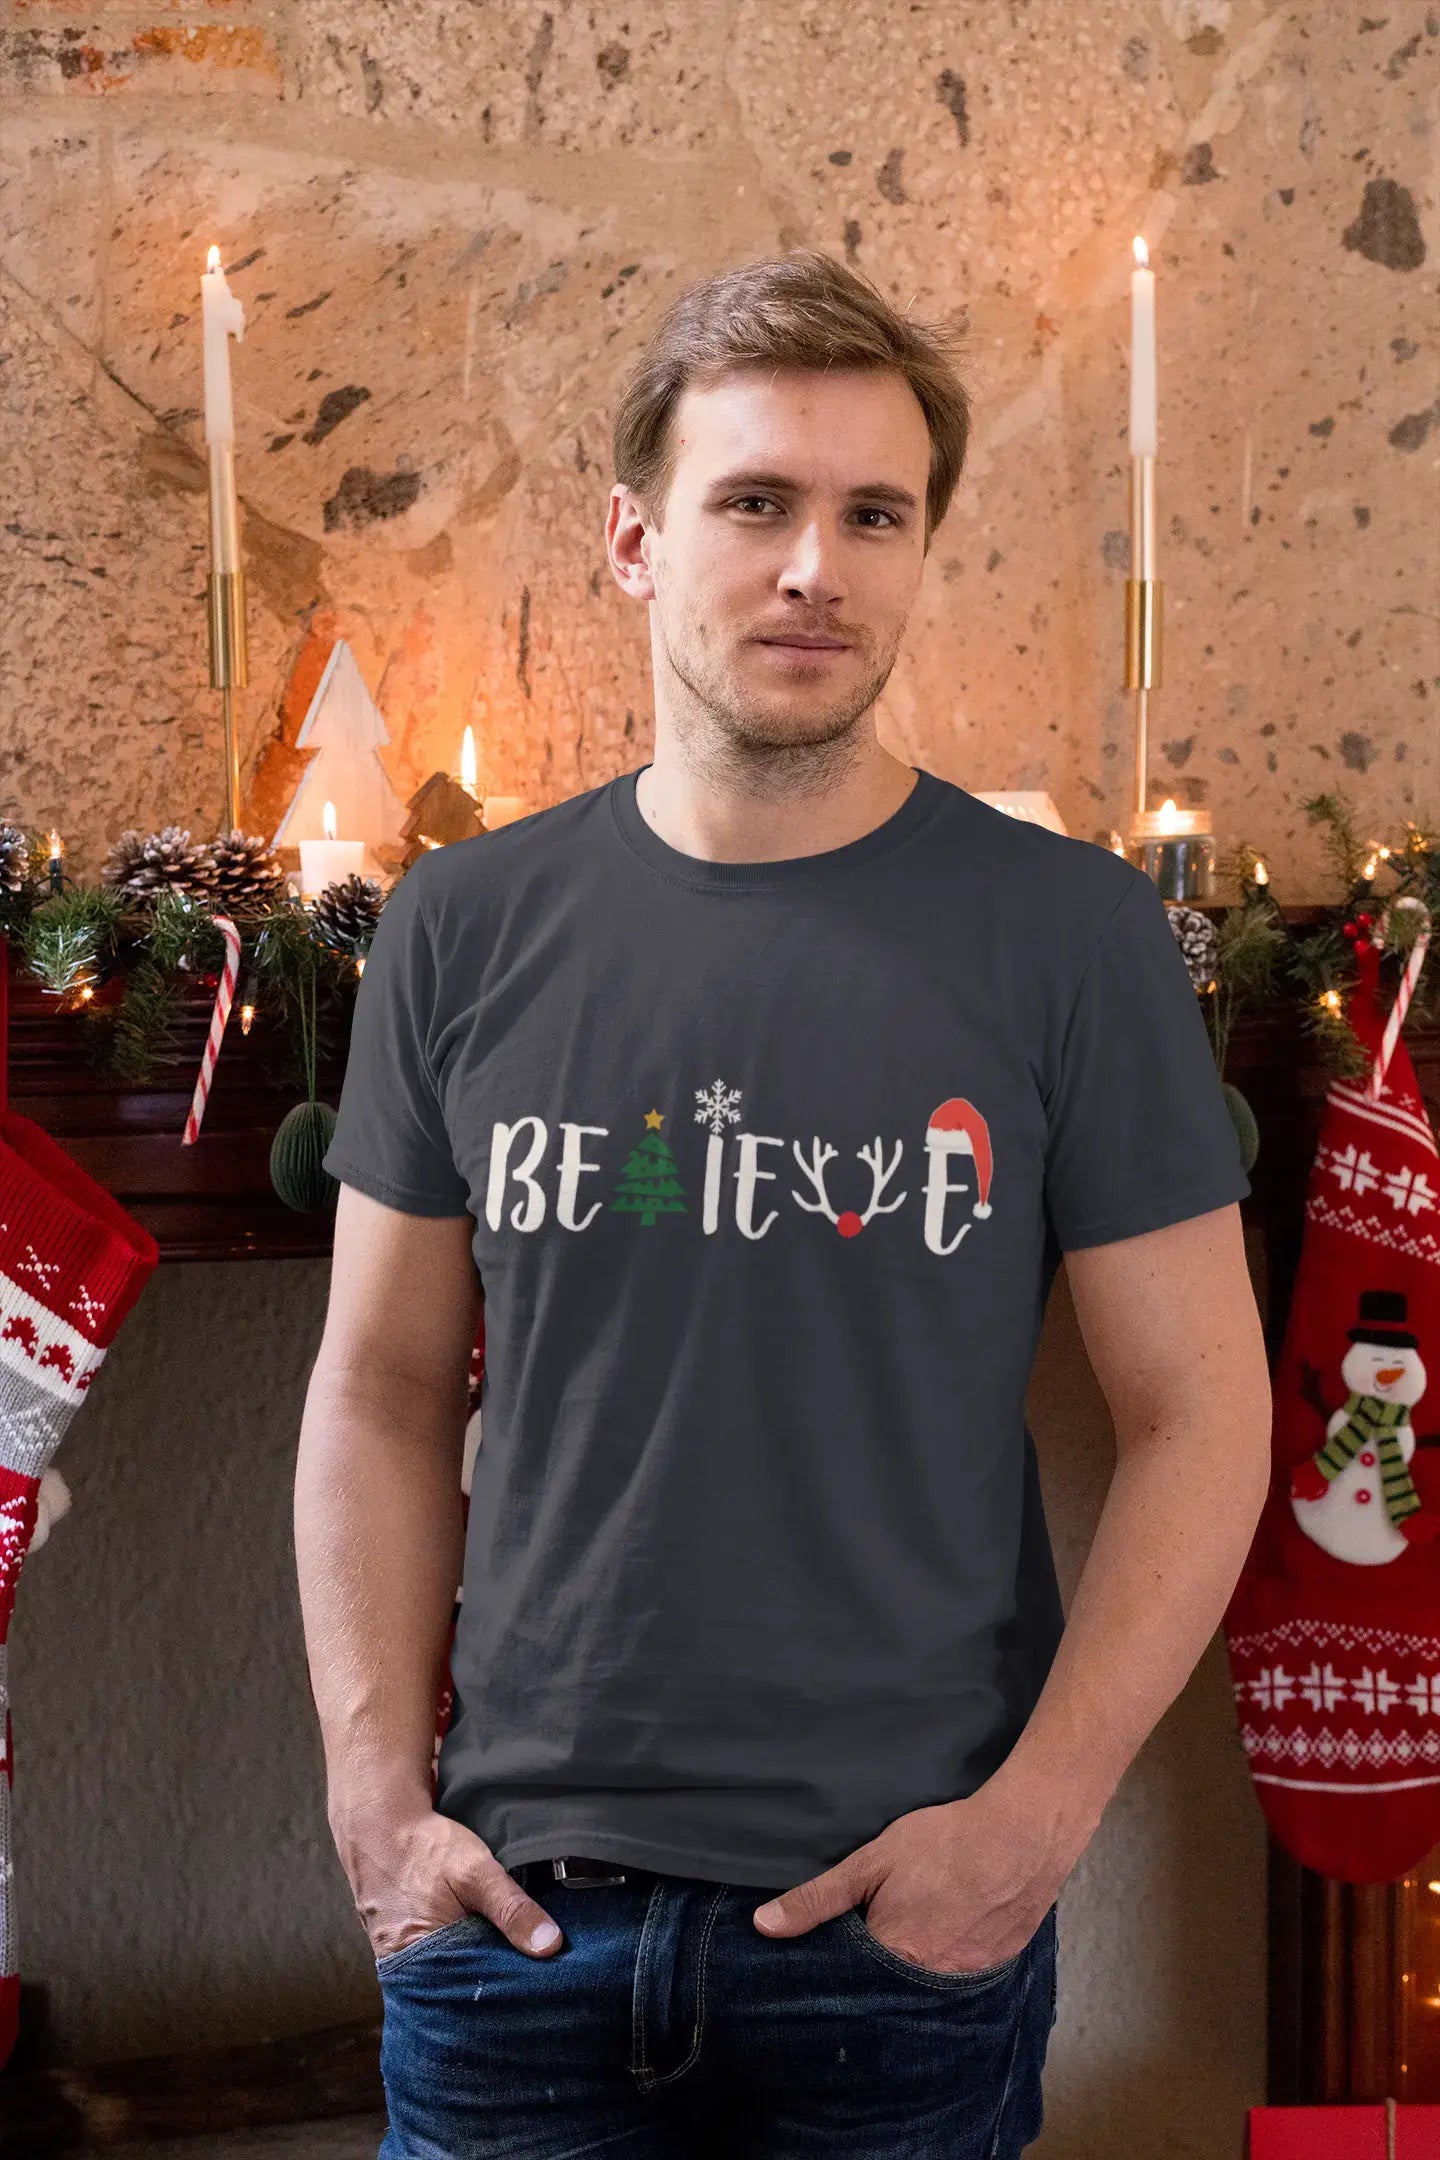 ULTRABASIC - Graphic Men's Christmas Believe Tree T-Shirt Xmas Gift Ideas Navy